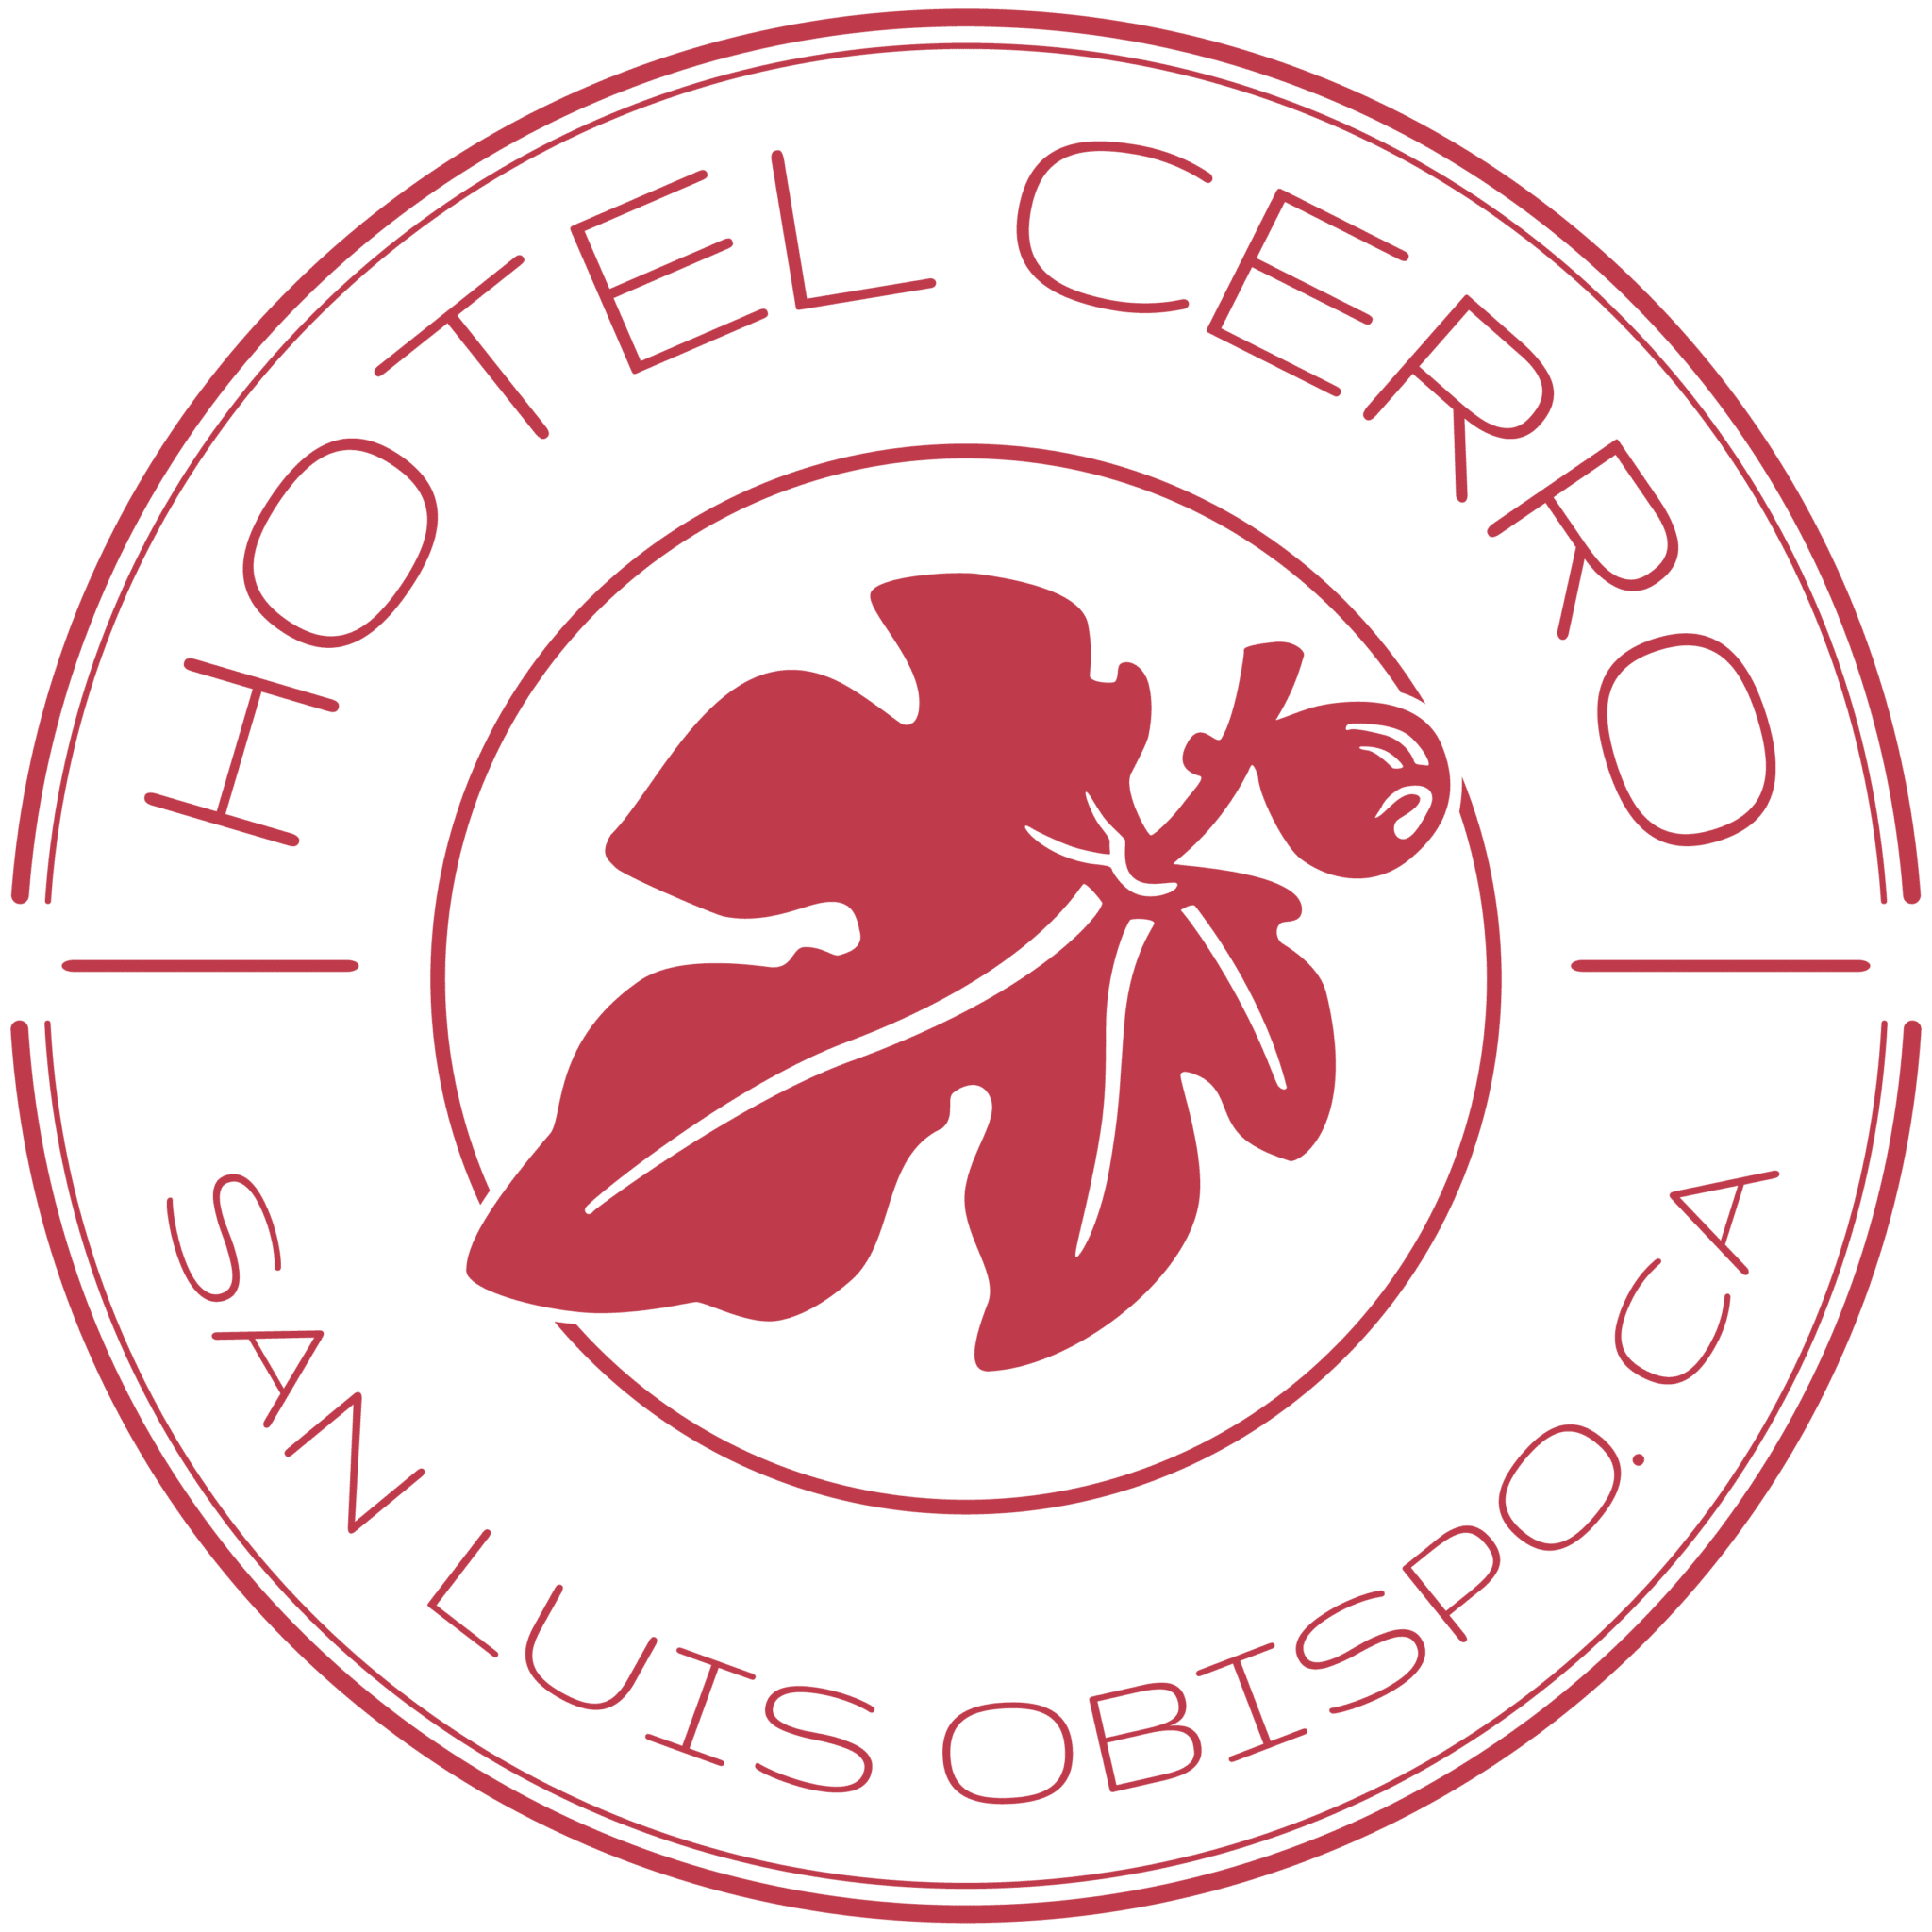 Hotel-Cerro-Logo-2048x2048